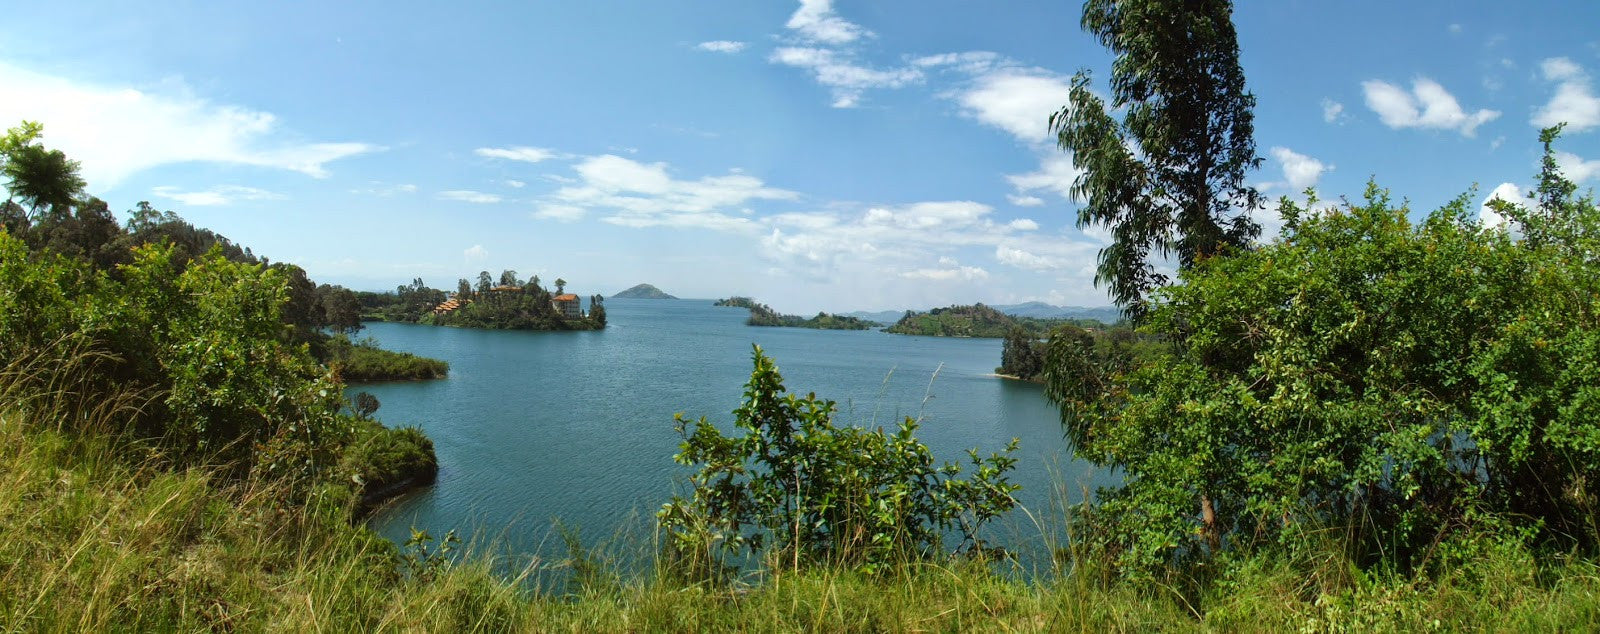 Kivu: A land rich in coffee